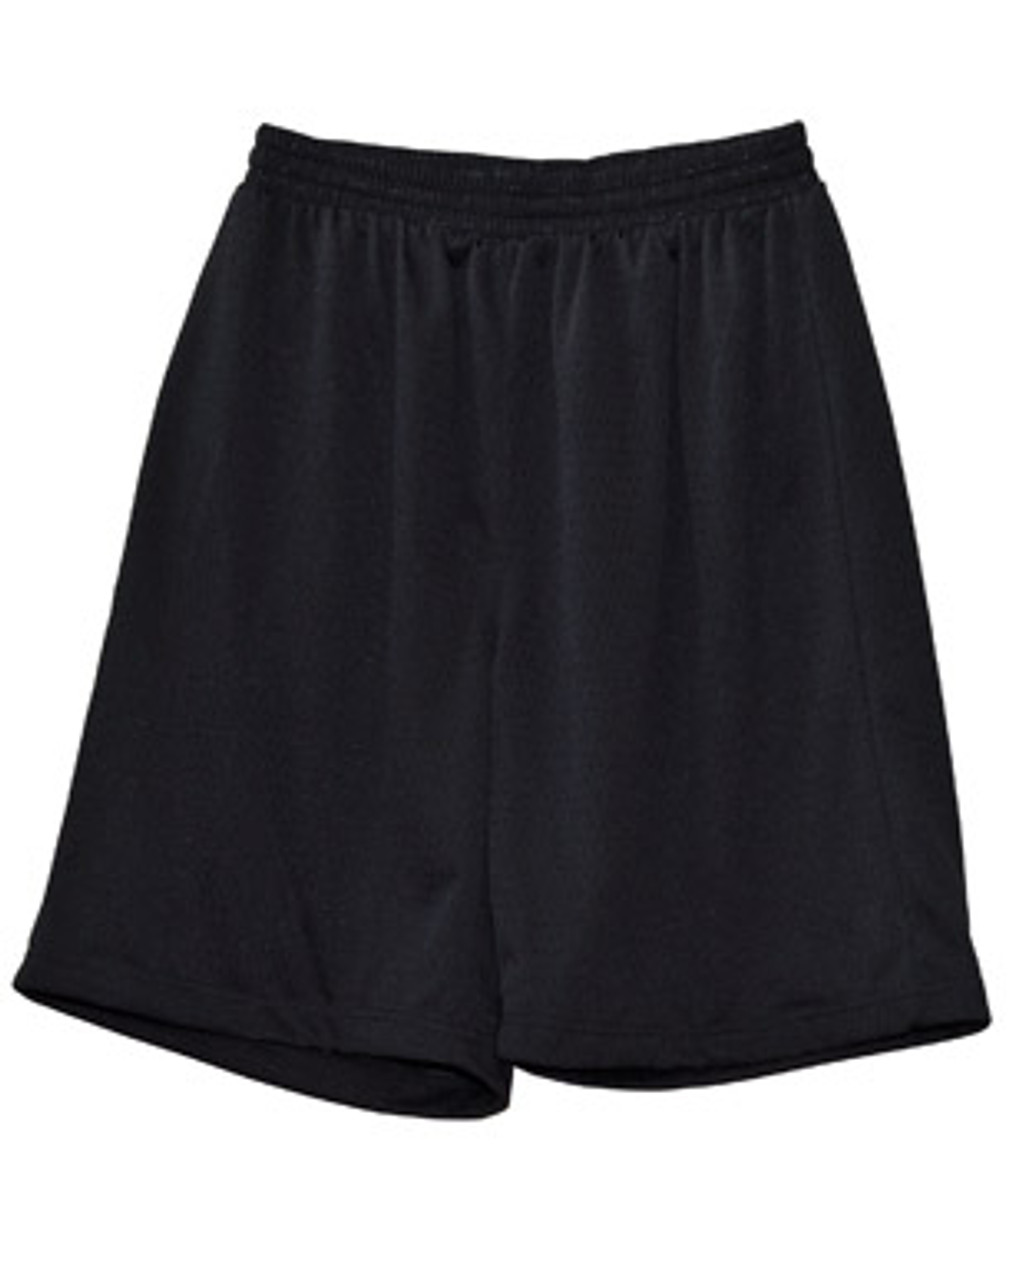 Kids Basketball Shorts | Boys Basketball Shorts